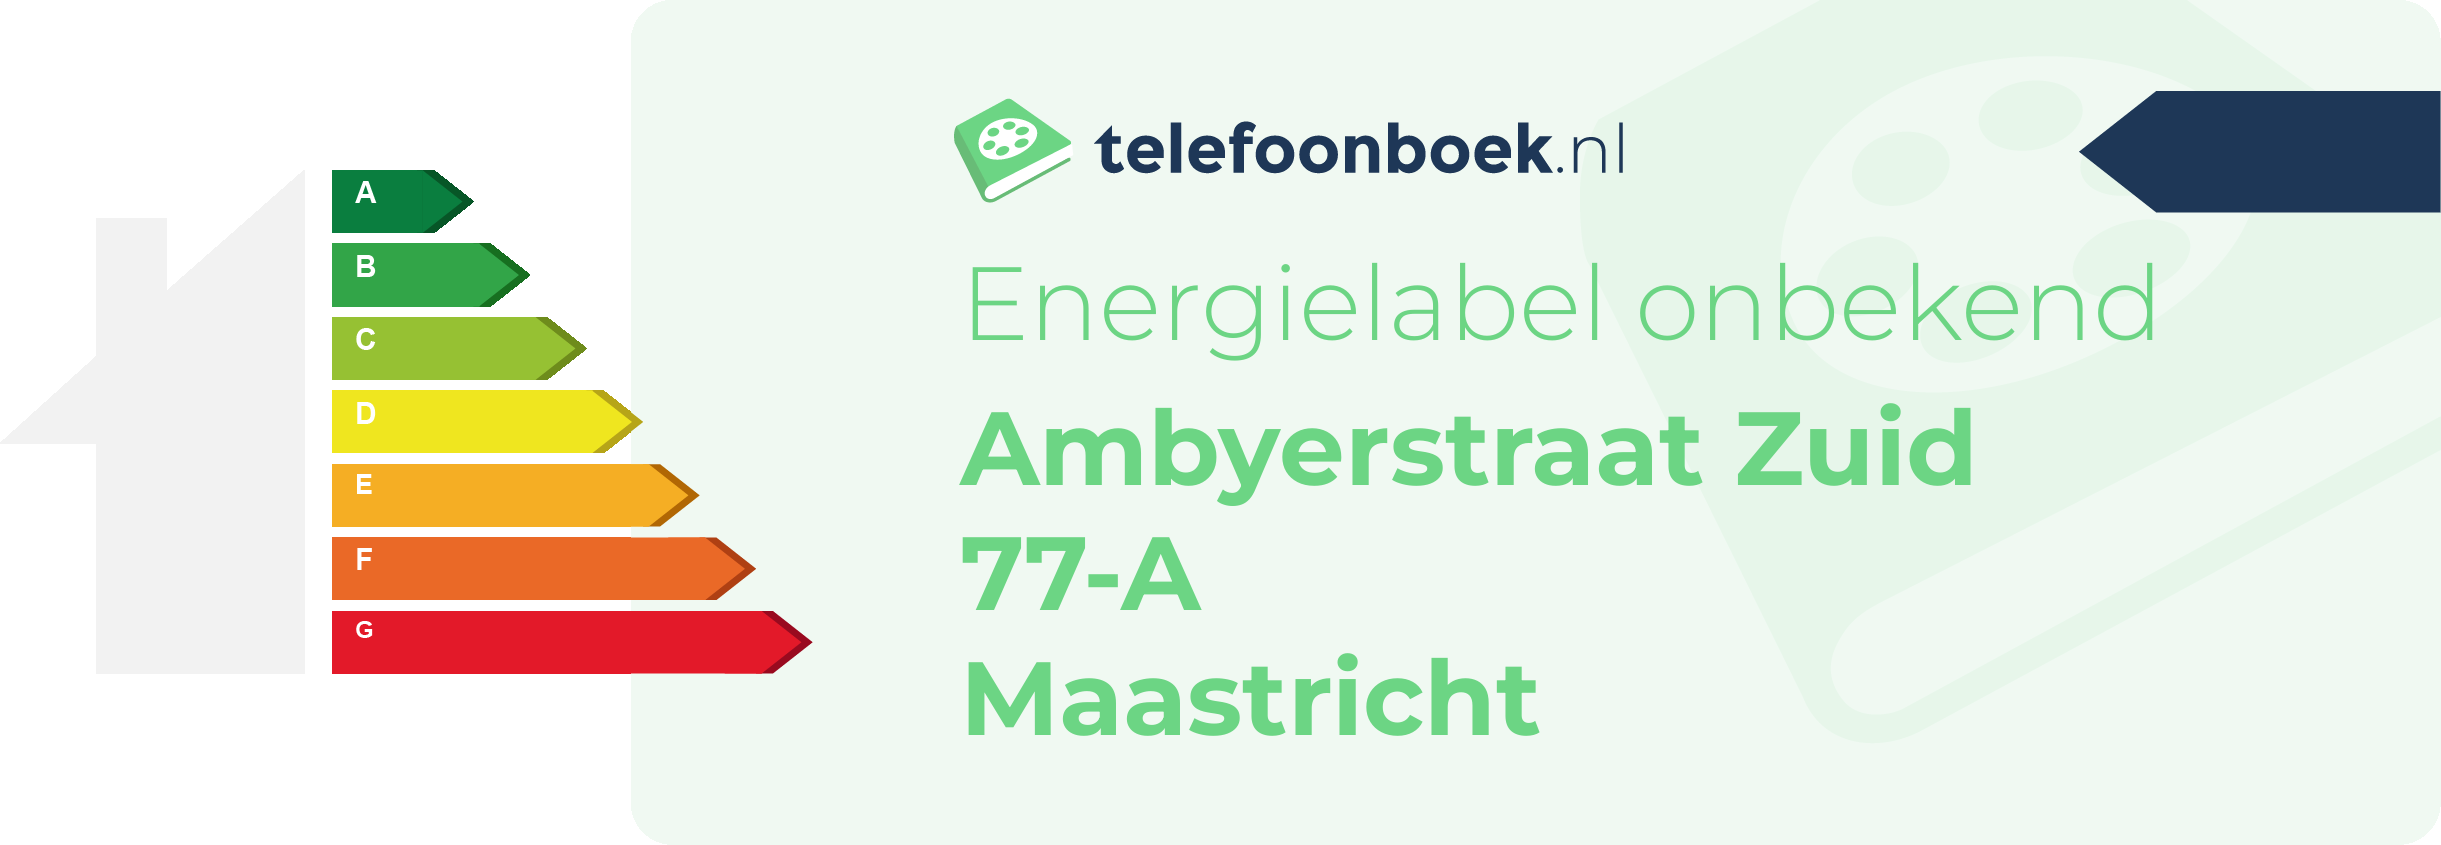 Energielabel Ambyerstraat Zuid 77-A Maastricht